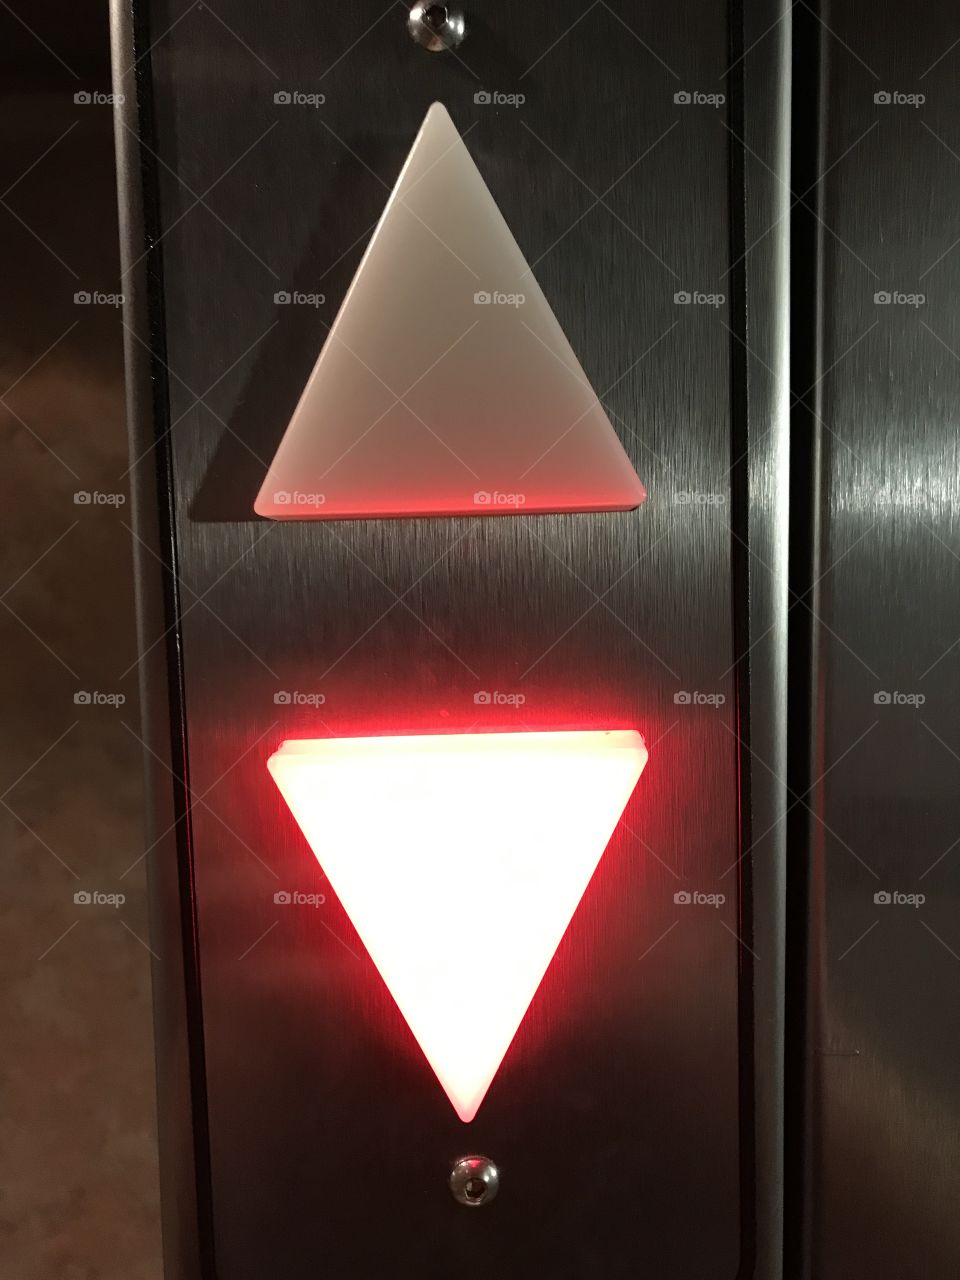 Minimalistic elevator down arrow 